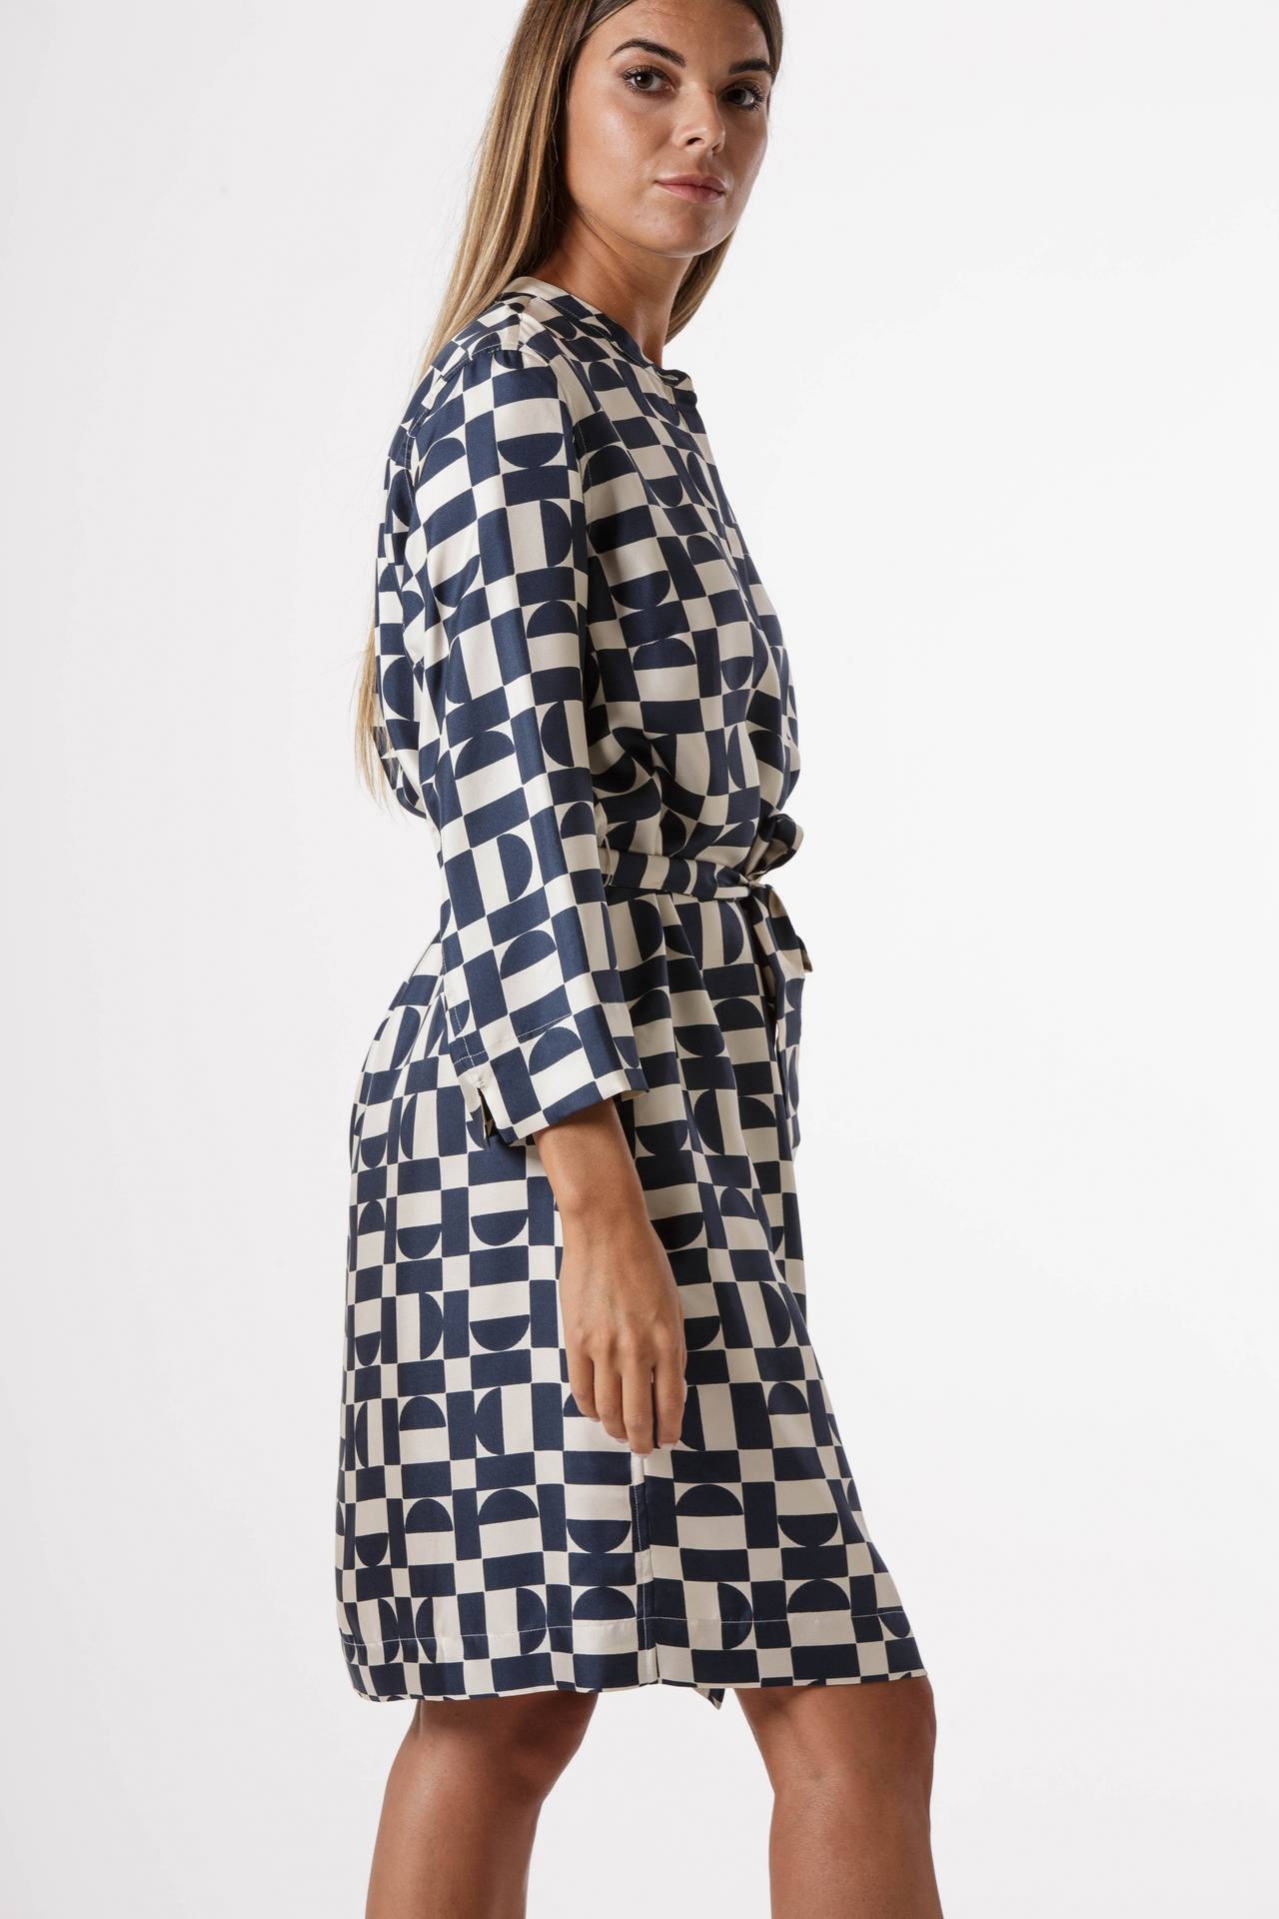 TIMEX patterned dress